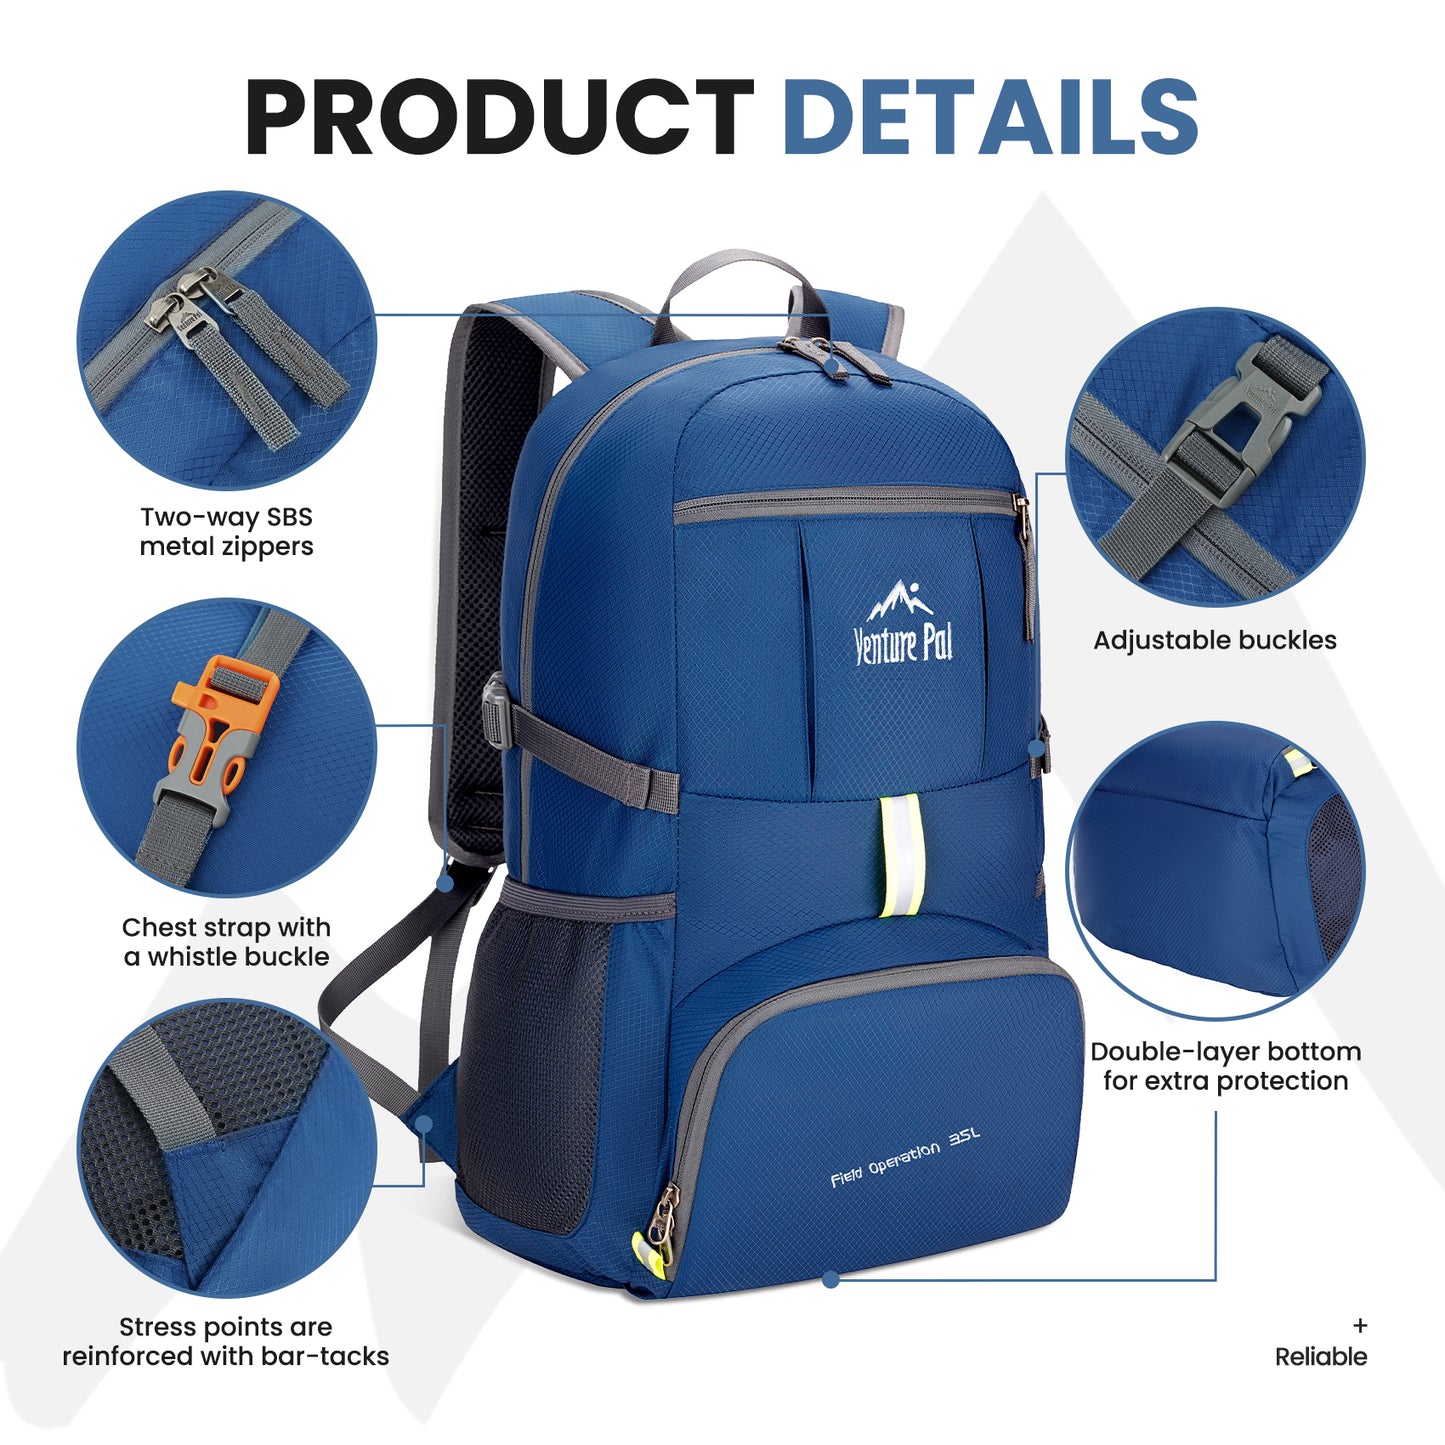 Venture Pal Navy Blue 35L Double-Layer Bottom & Shoulder Straps Sports Backpack